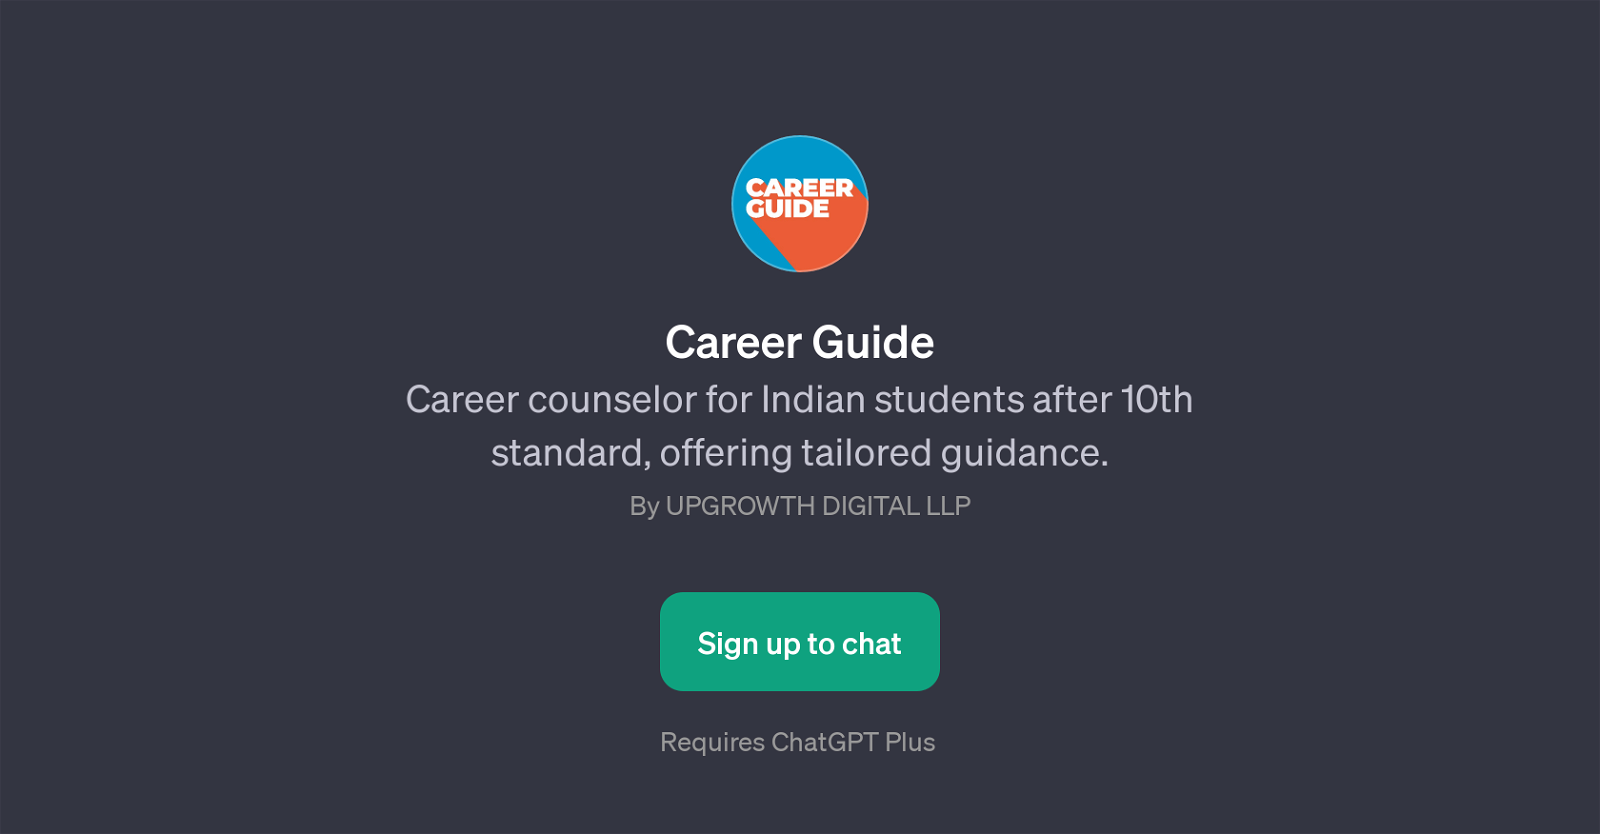 Career Guide website